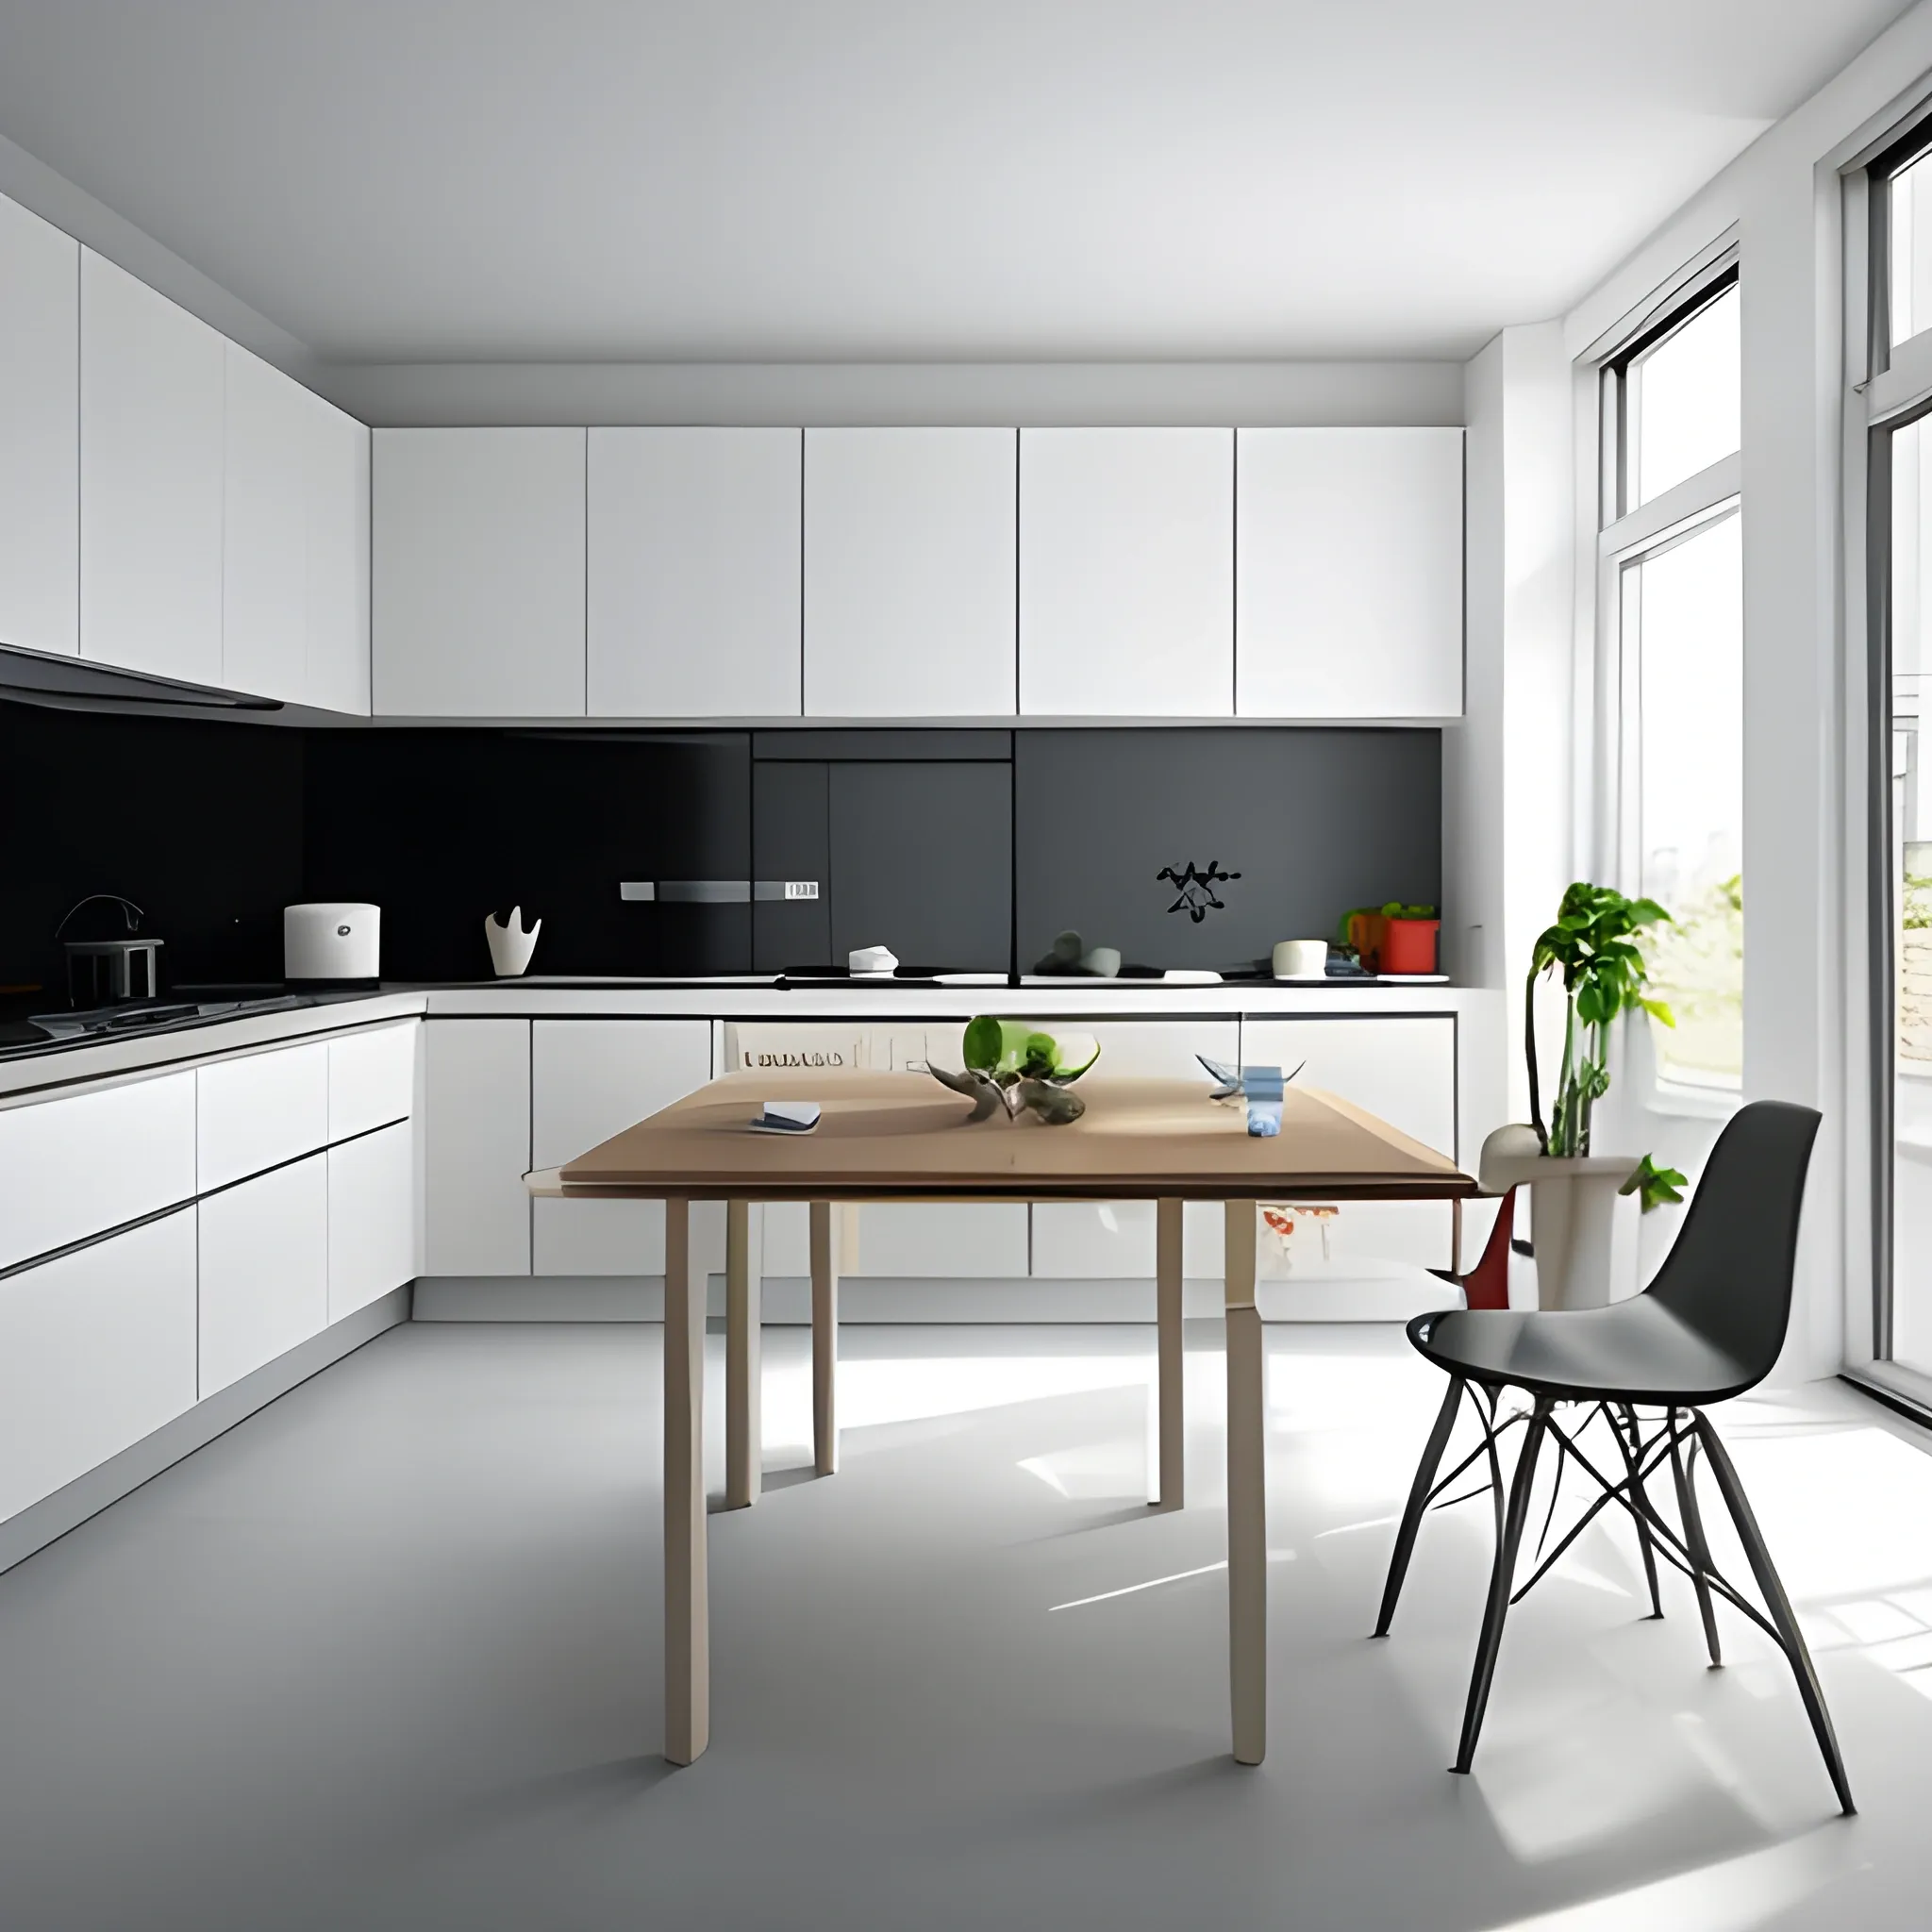 A view of minimalistic kitchen
